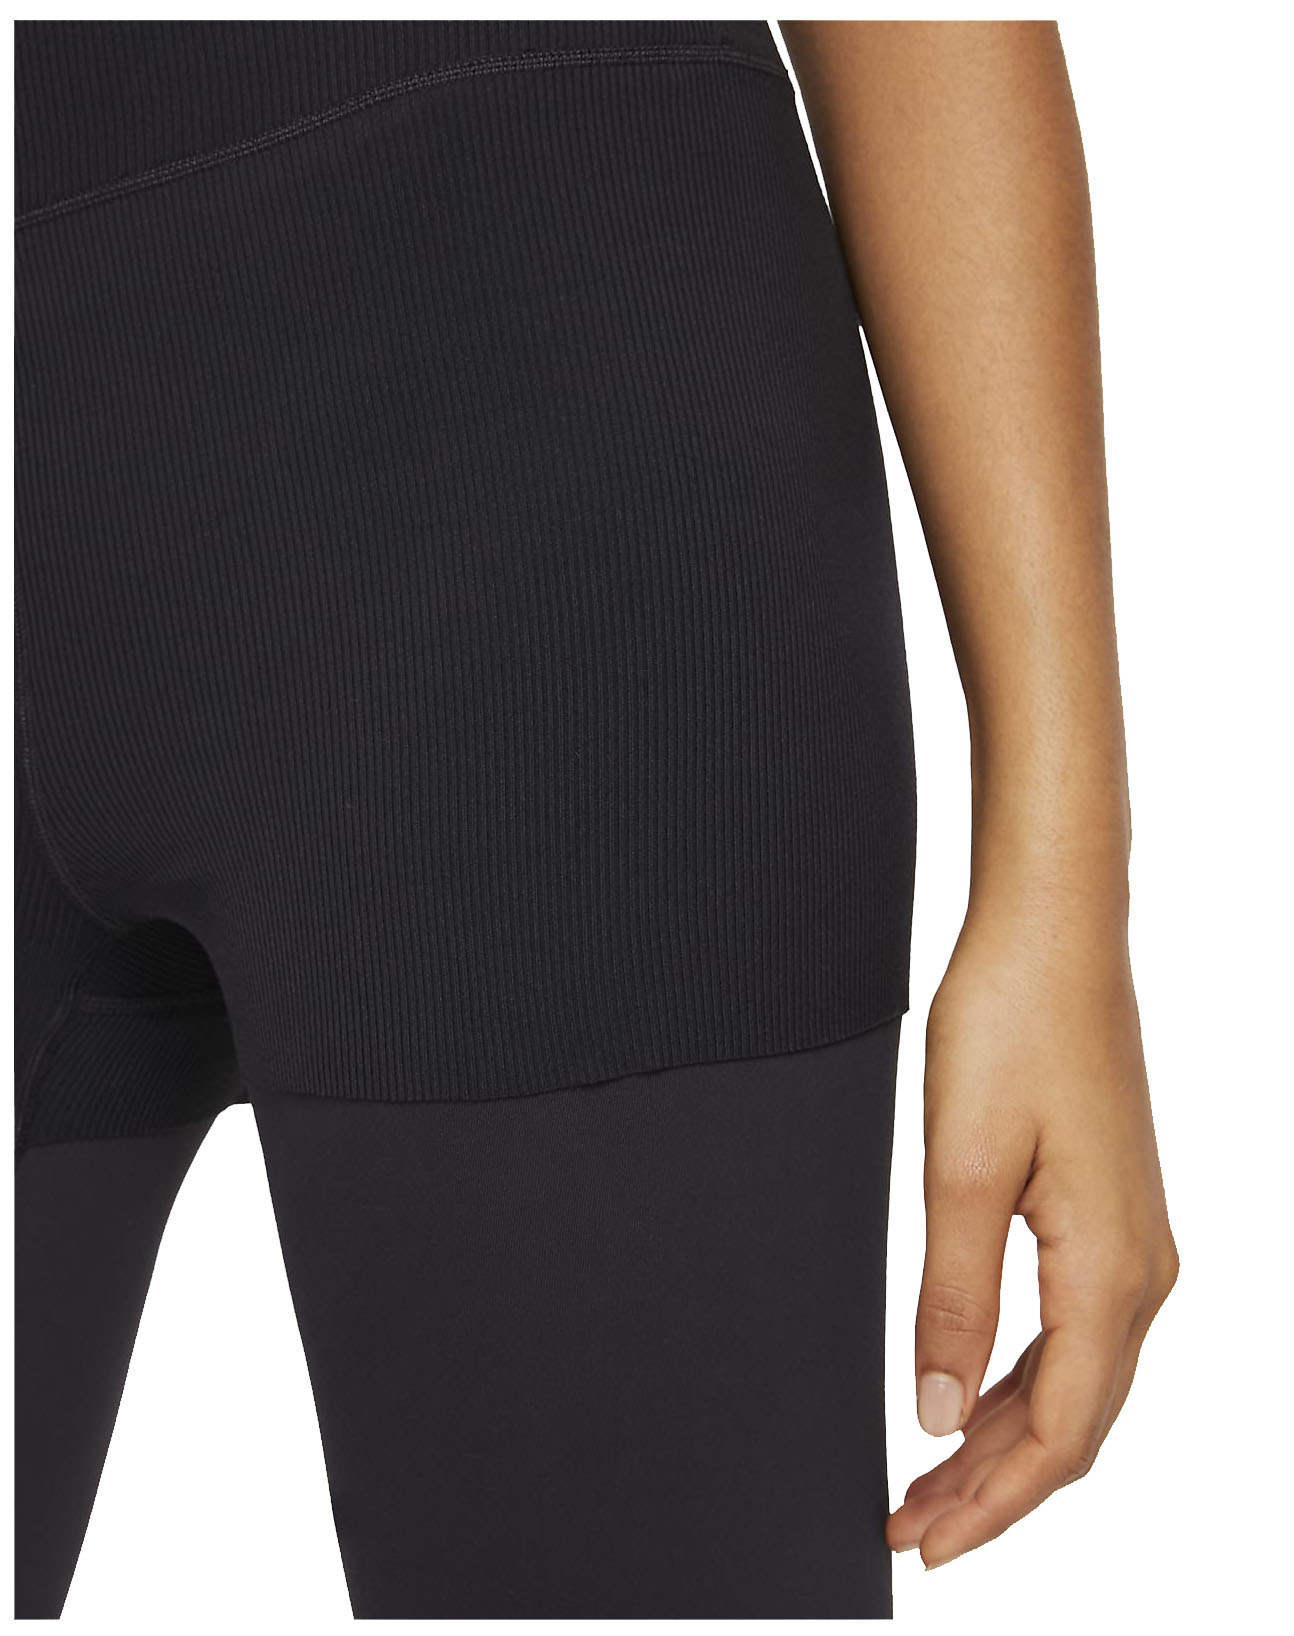 Nike Women's Yoga Luxe Layered 7/8 Leggings DA0729-010 XS-XL Black $100 NEW